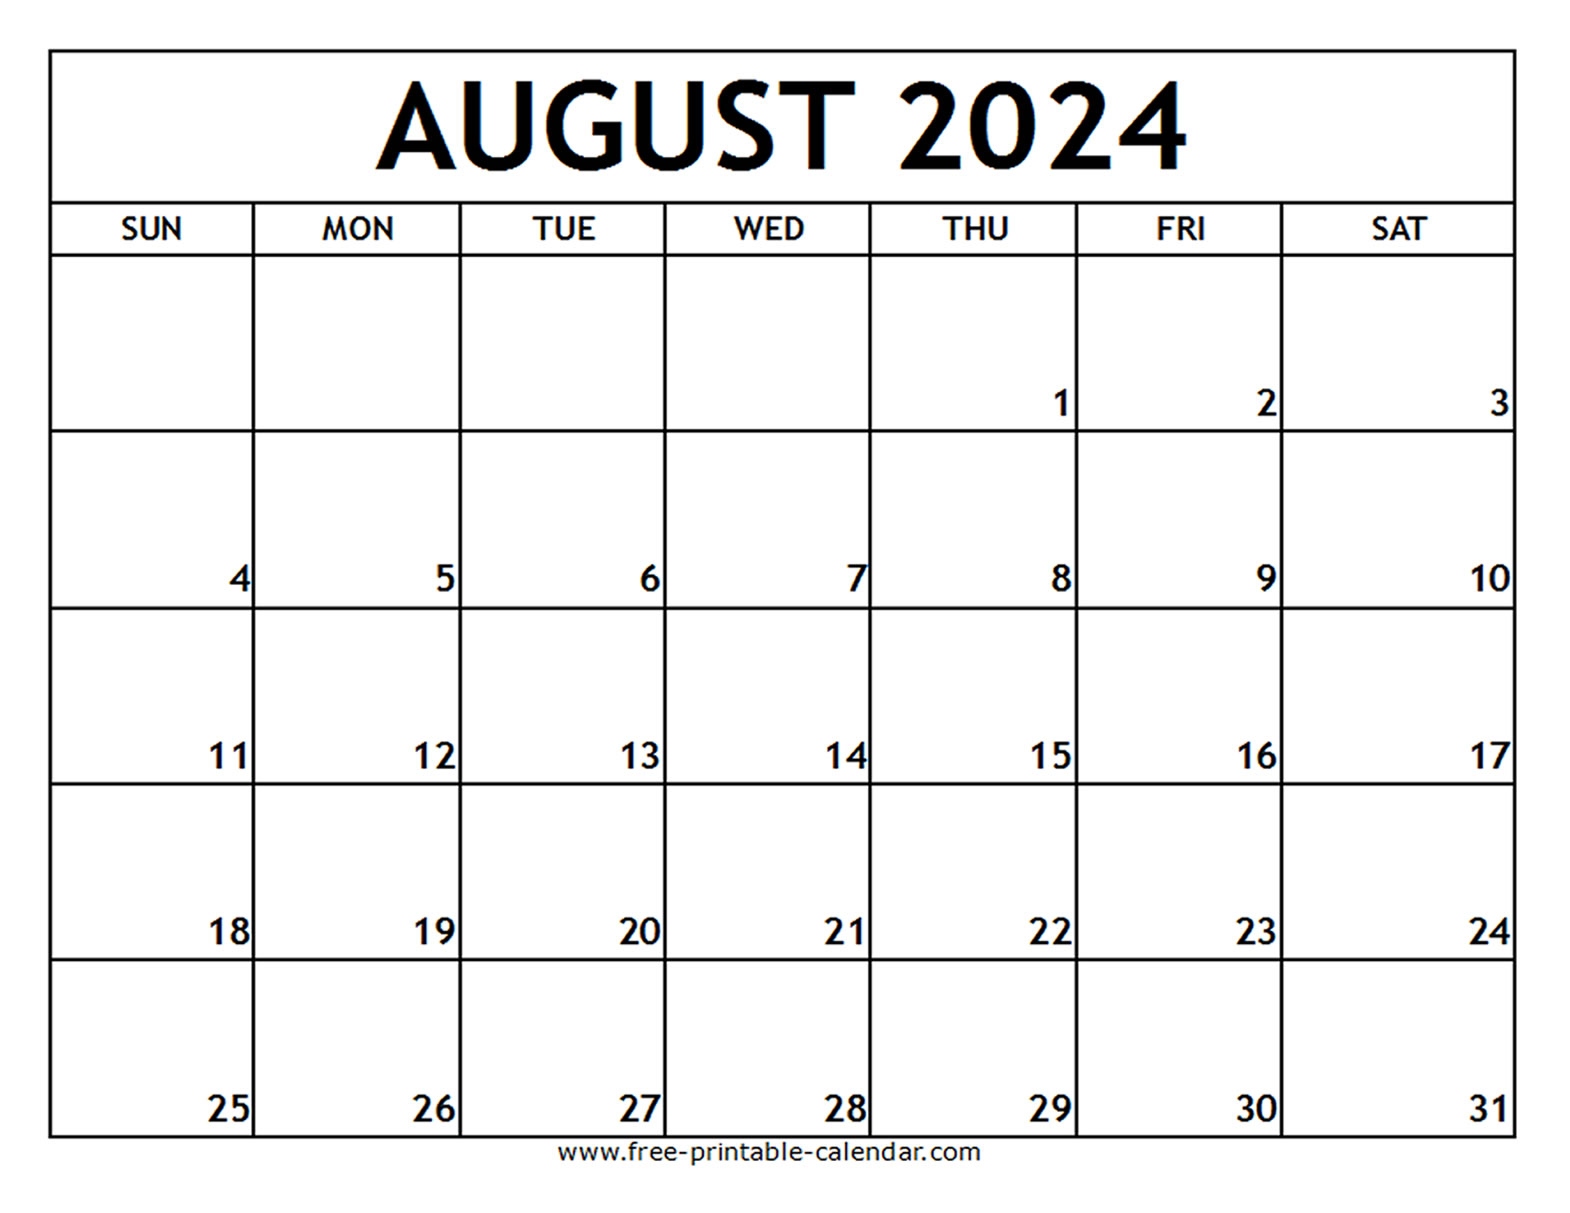 August 2024 Printable Calendar - Free-Printable-Calendar with Free Printable Calendar 2024 August With Holidays